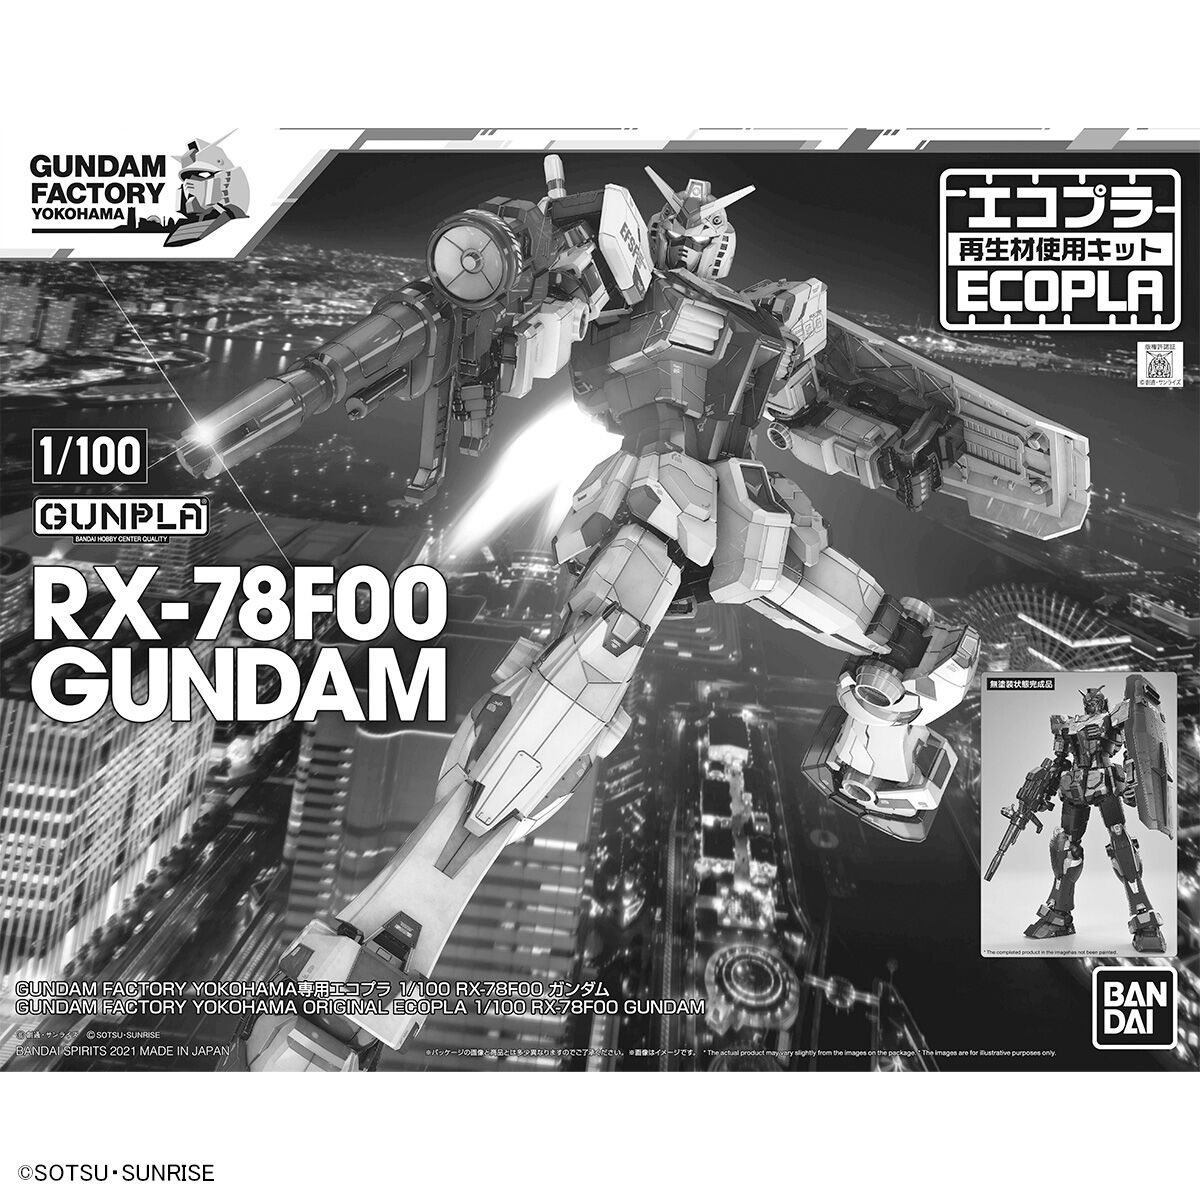 GUNDAM FACTORY YOKOHAMA専用エコプラ 1/100 RX-78F00 ガンダム | 機動